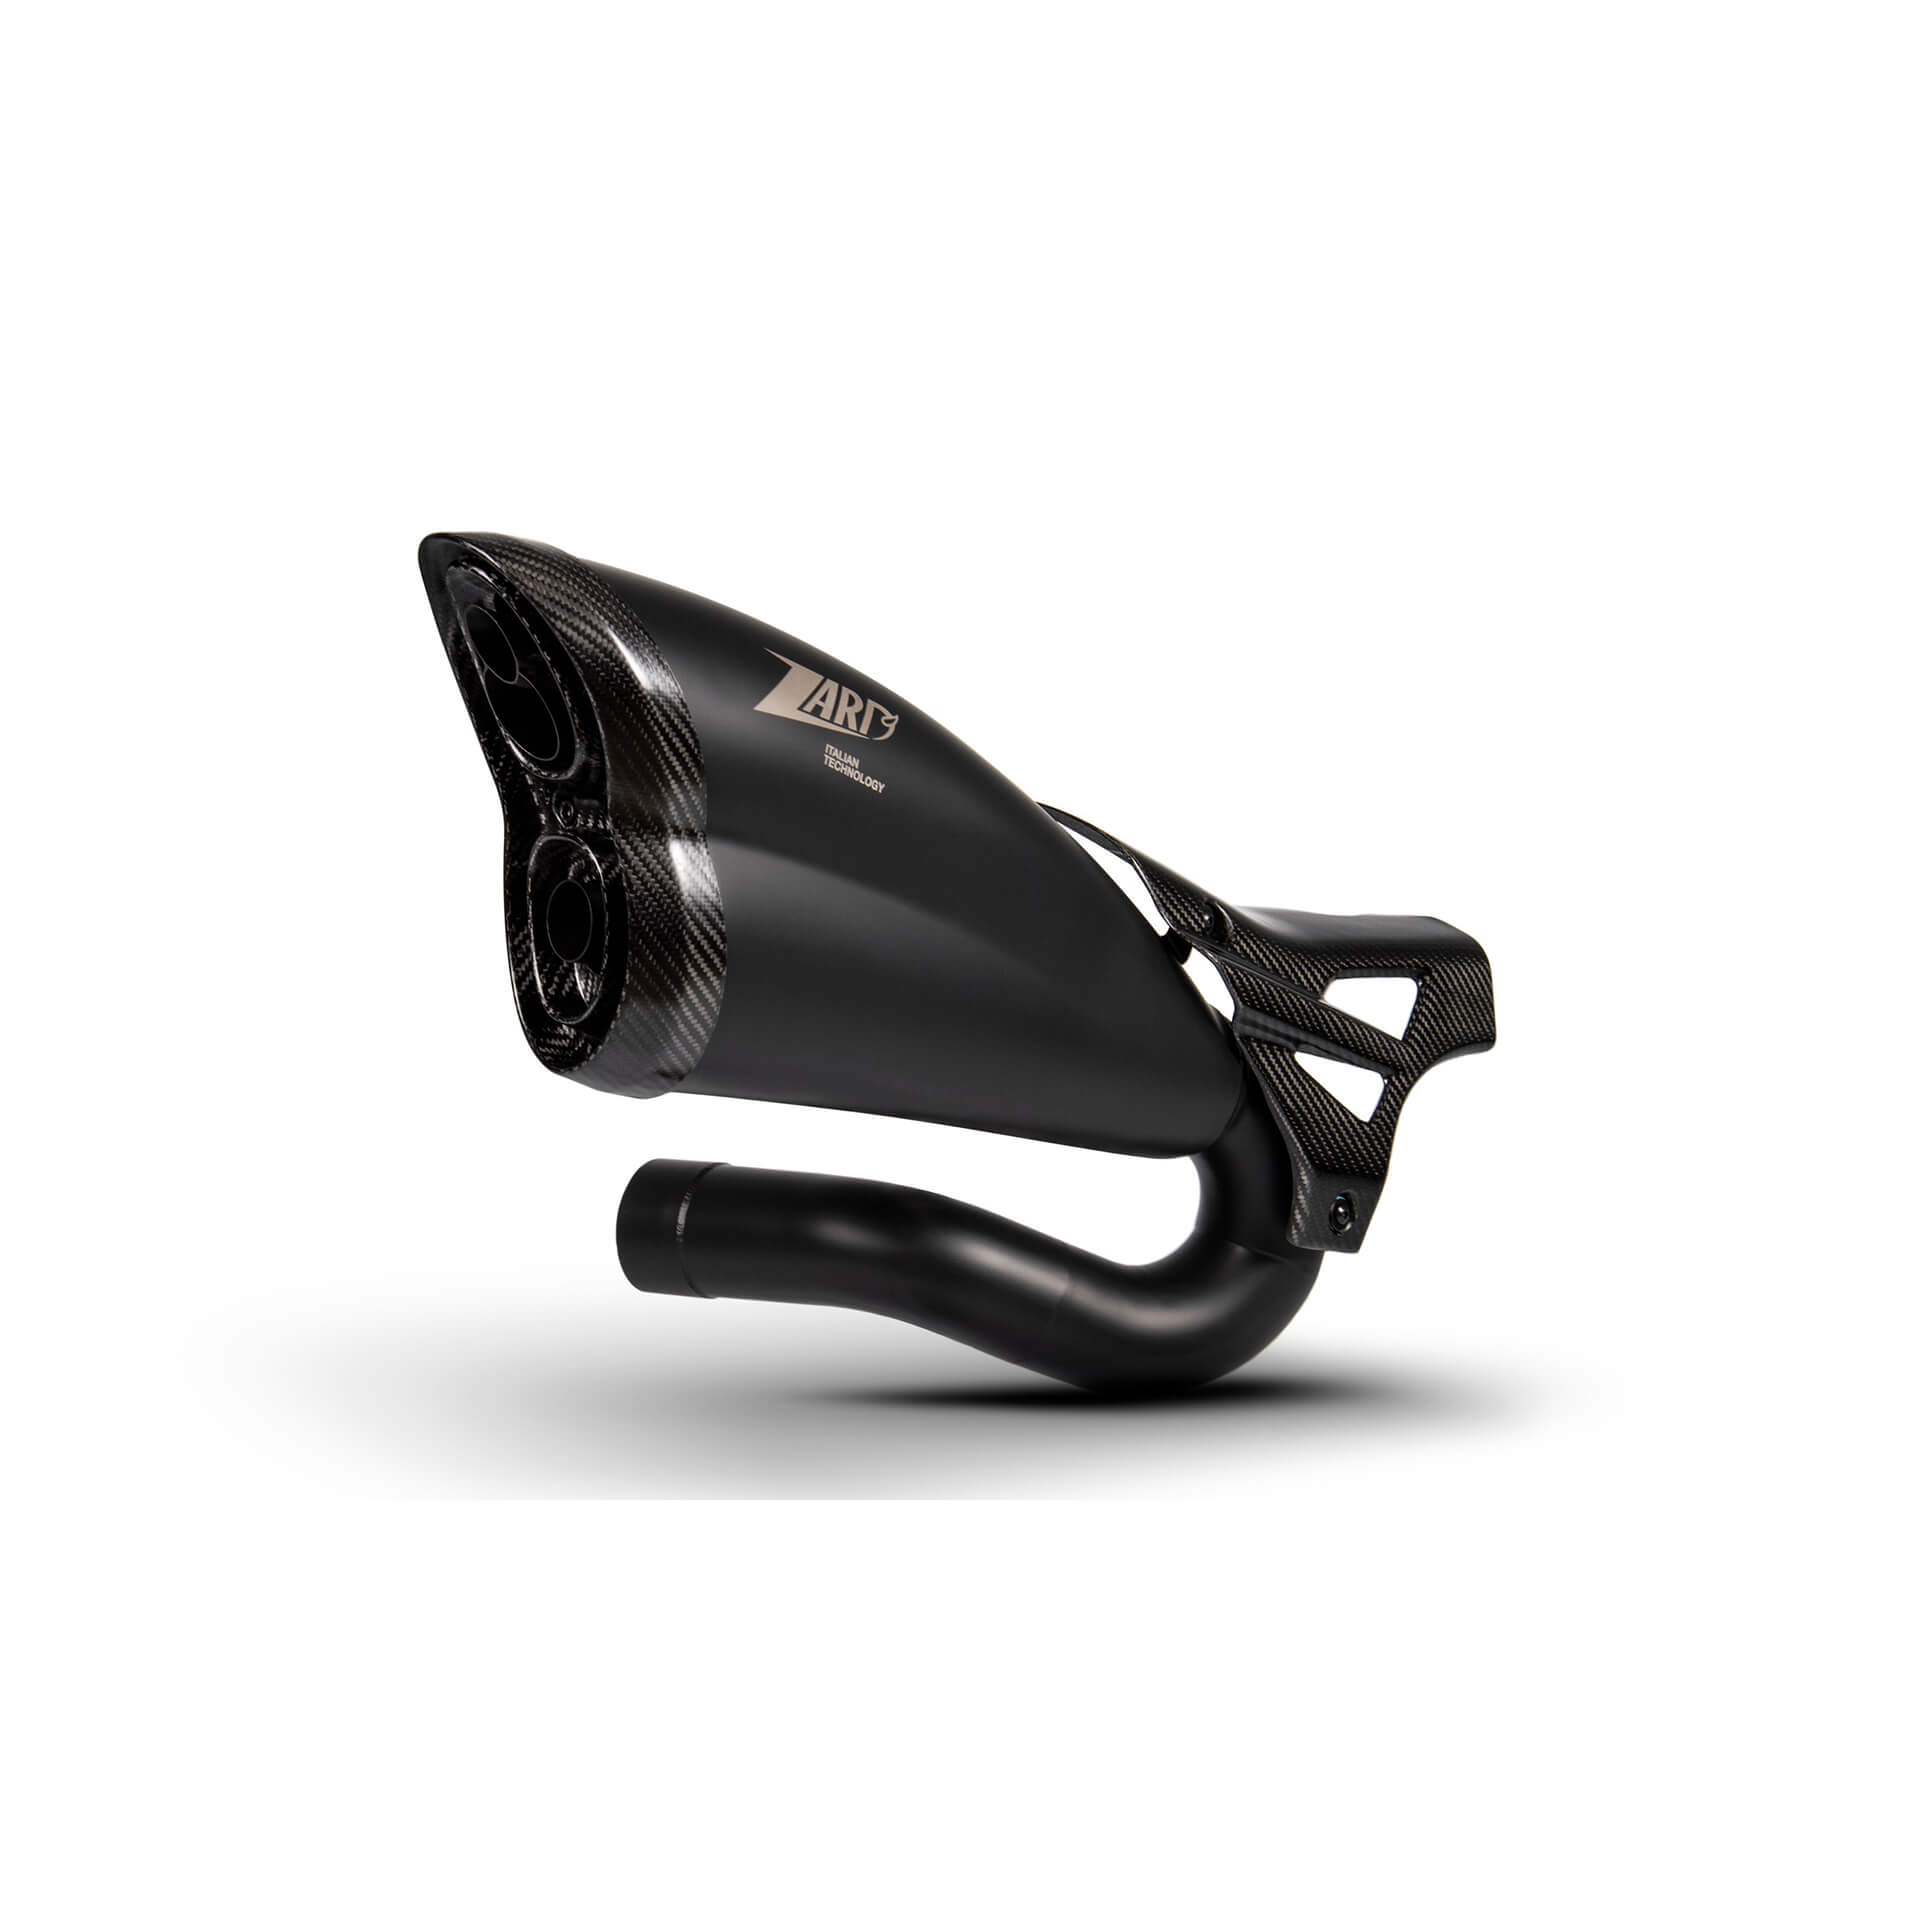 Zard Zard-Triumph Rocket Iii My. 2020-2021 Slip On 3-1, Racing, Black  - Black